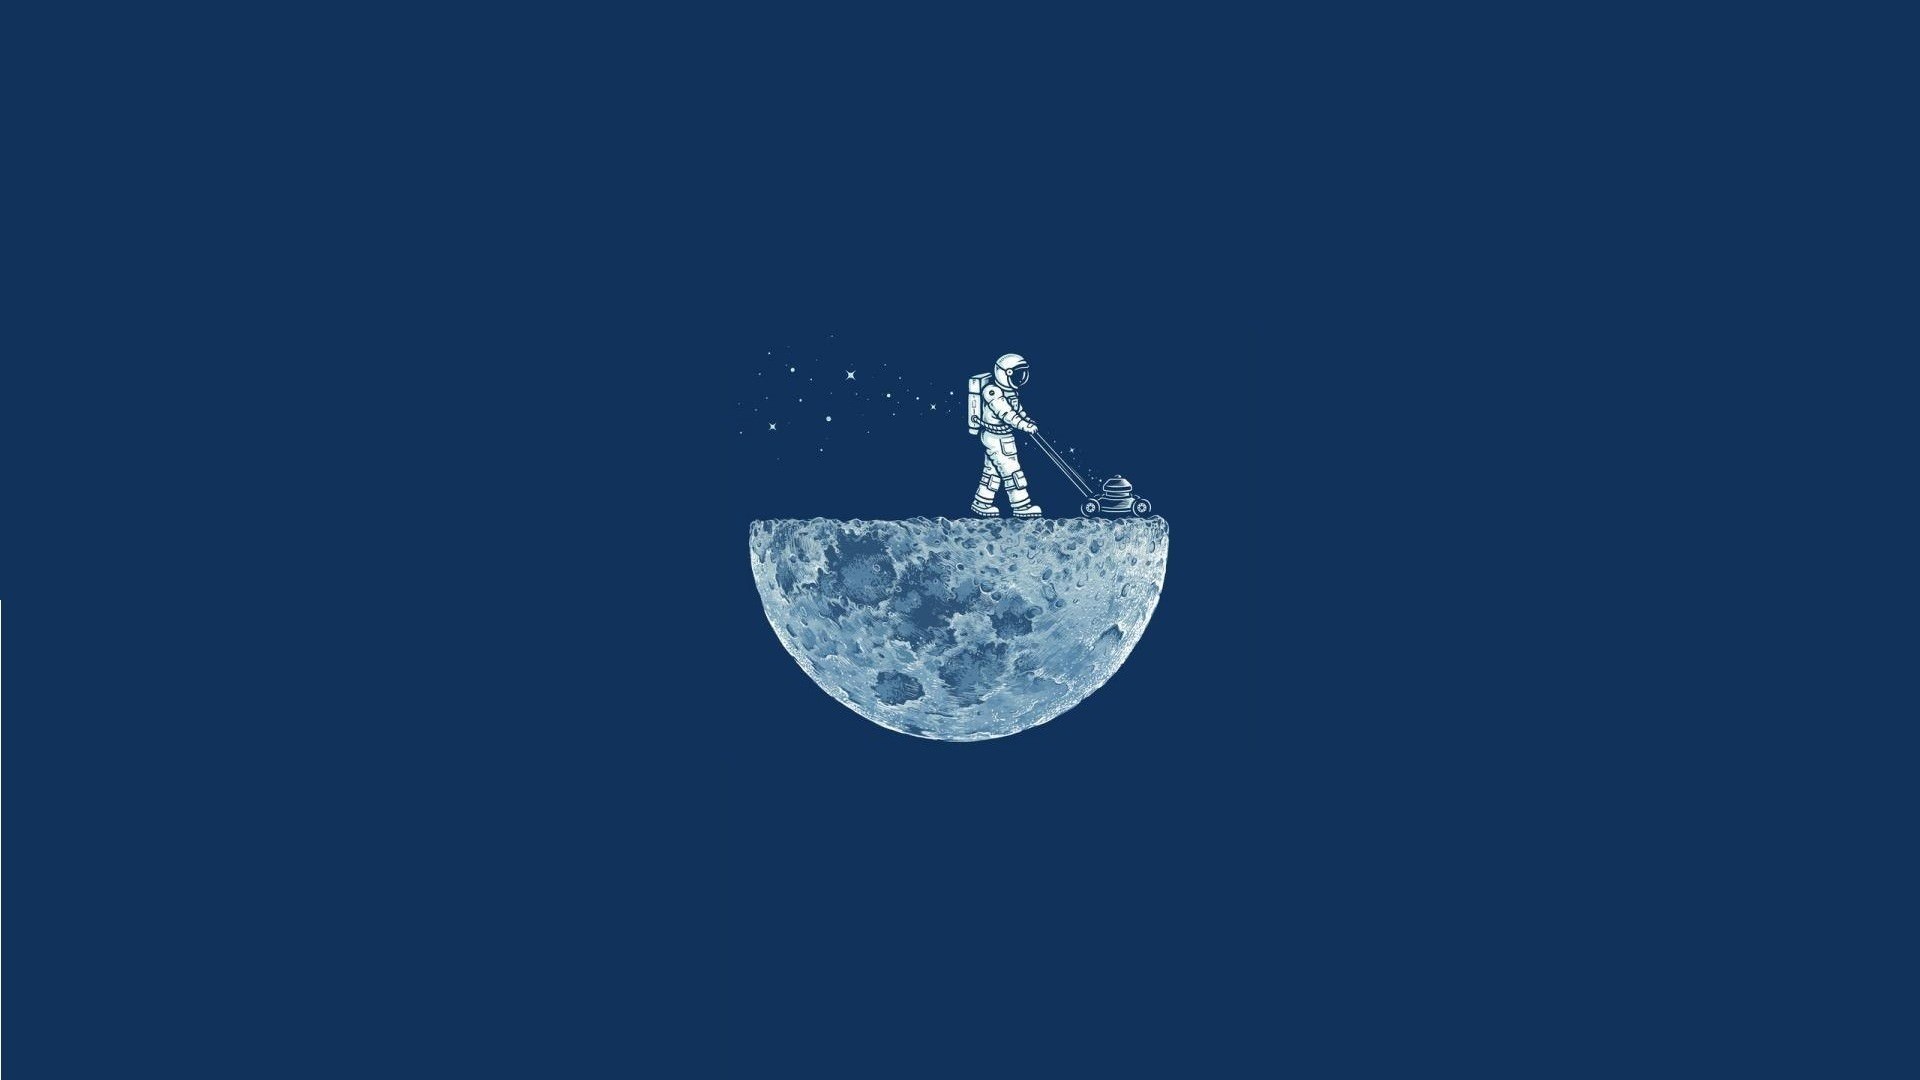 DigitalArtio Moon Astronauts Illustration Wallpaper Moon